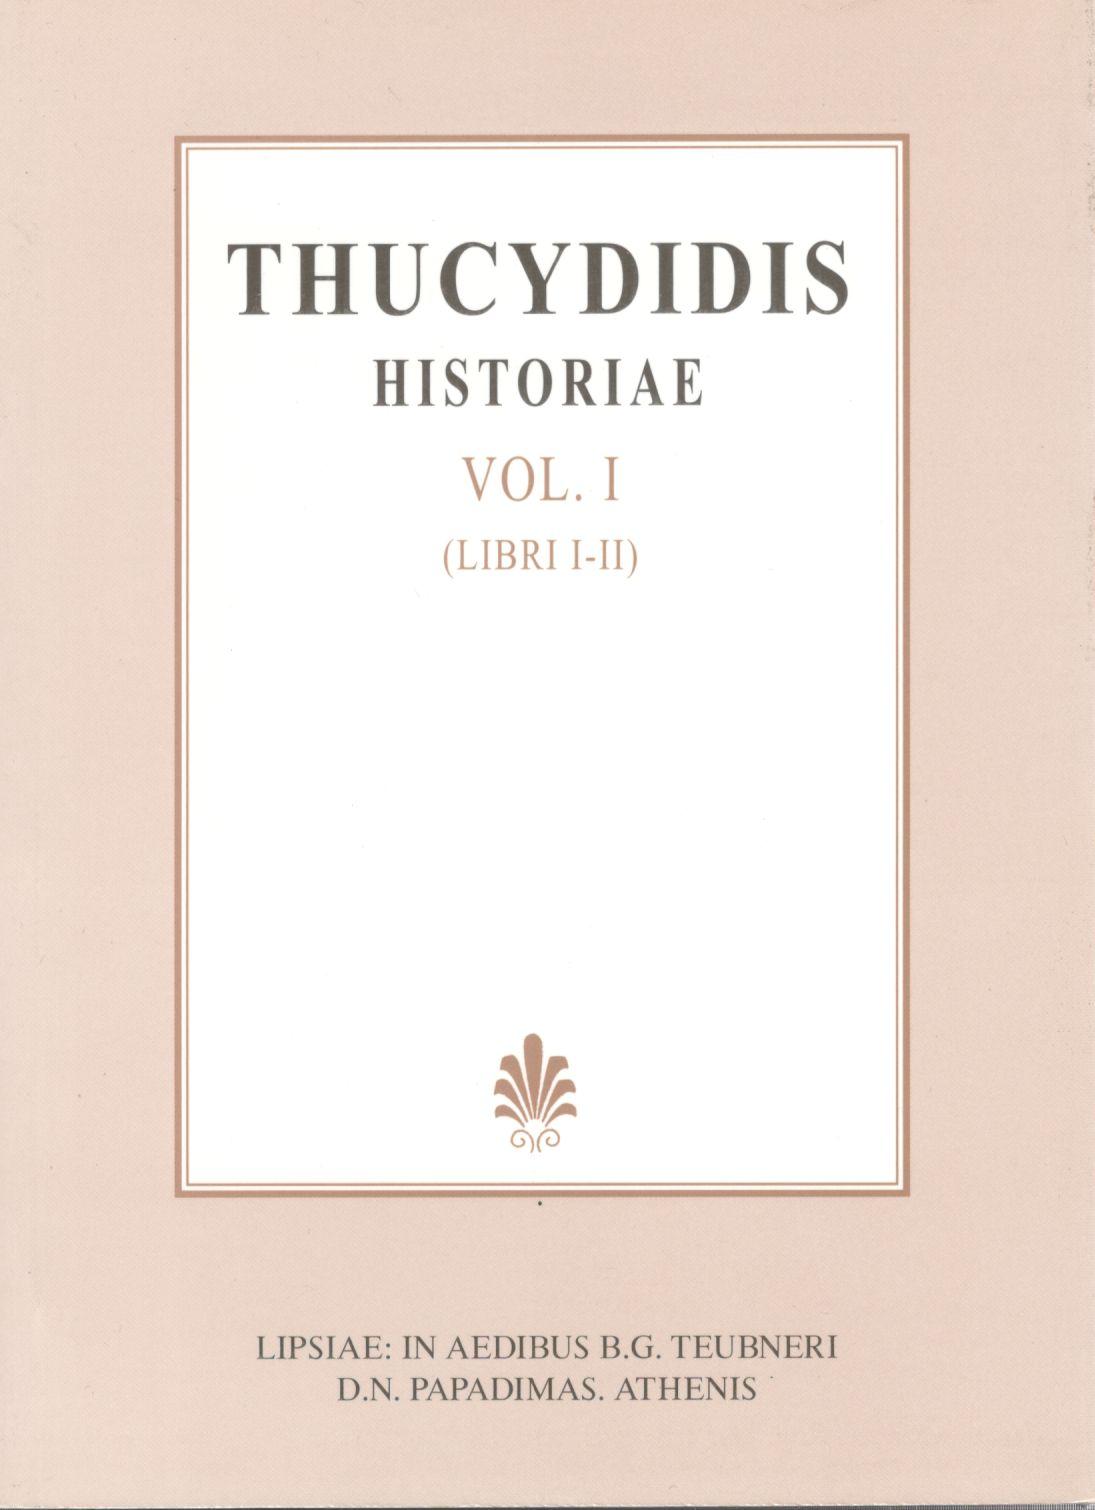 Thucydidis, Historiae, Vol. I, Lbri I-II [Θουκυδίδου, Ιστορίαι, τ. Α